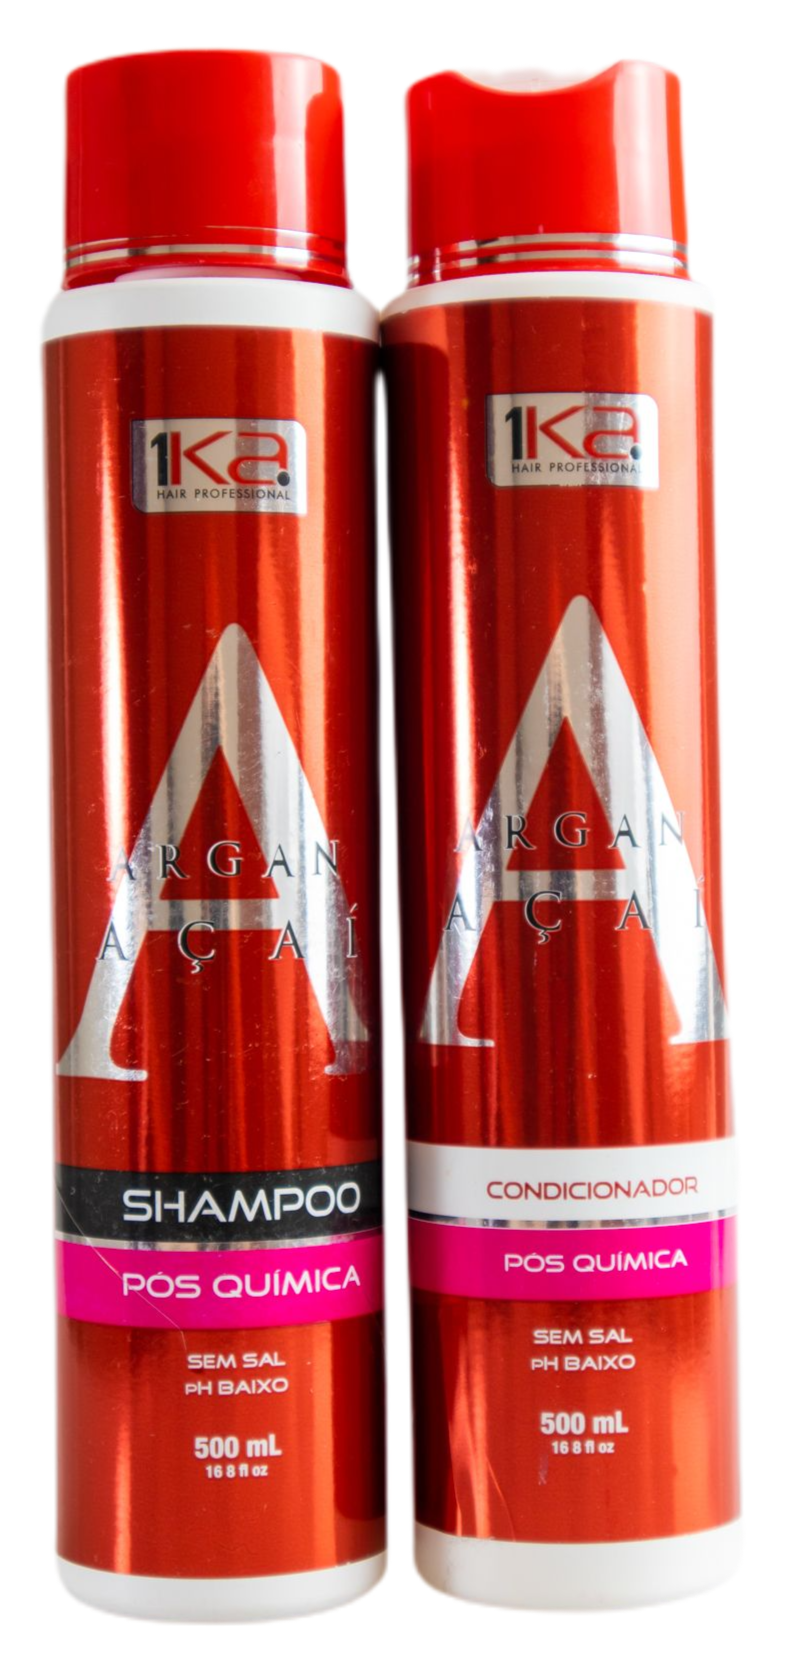 1Ka Home Care Argan and Açai Pos Progress Shampoo and Conditioner Maintenance 2x500ml - 1Ka